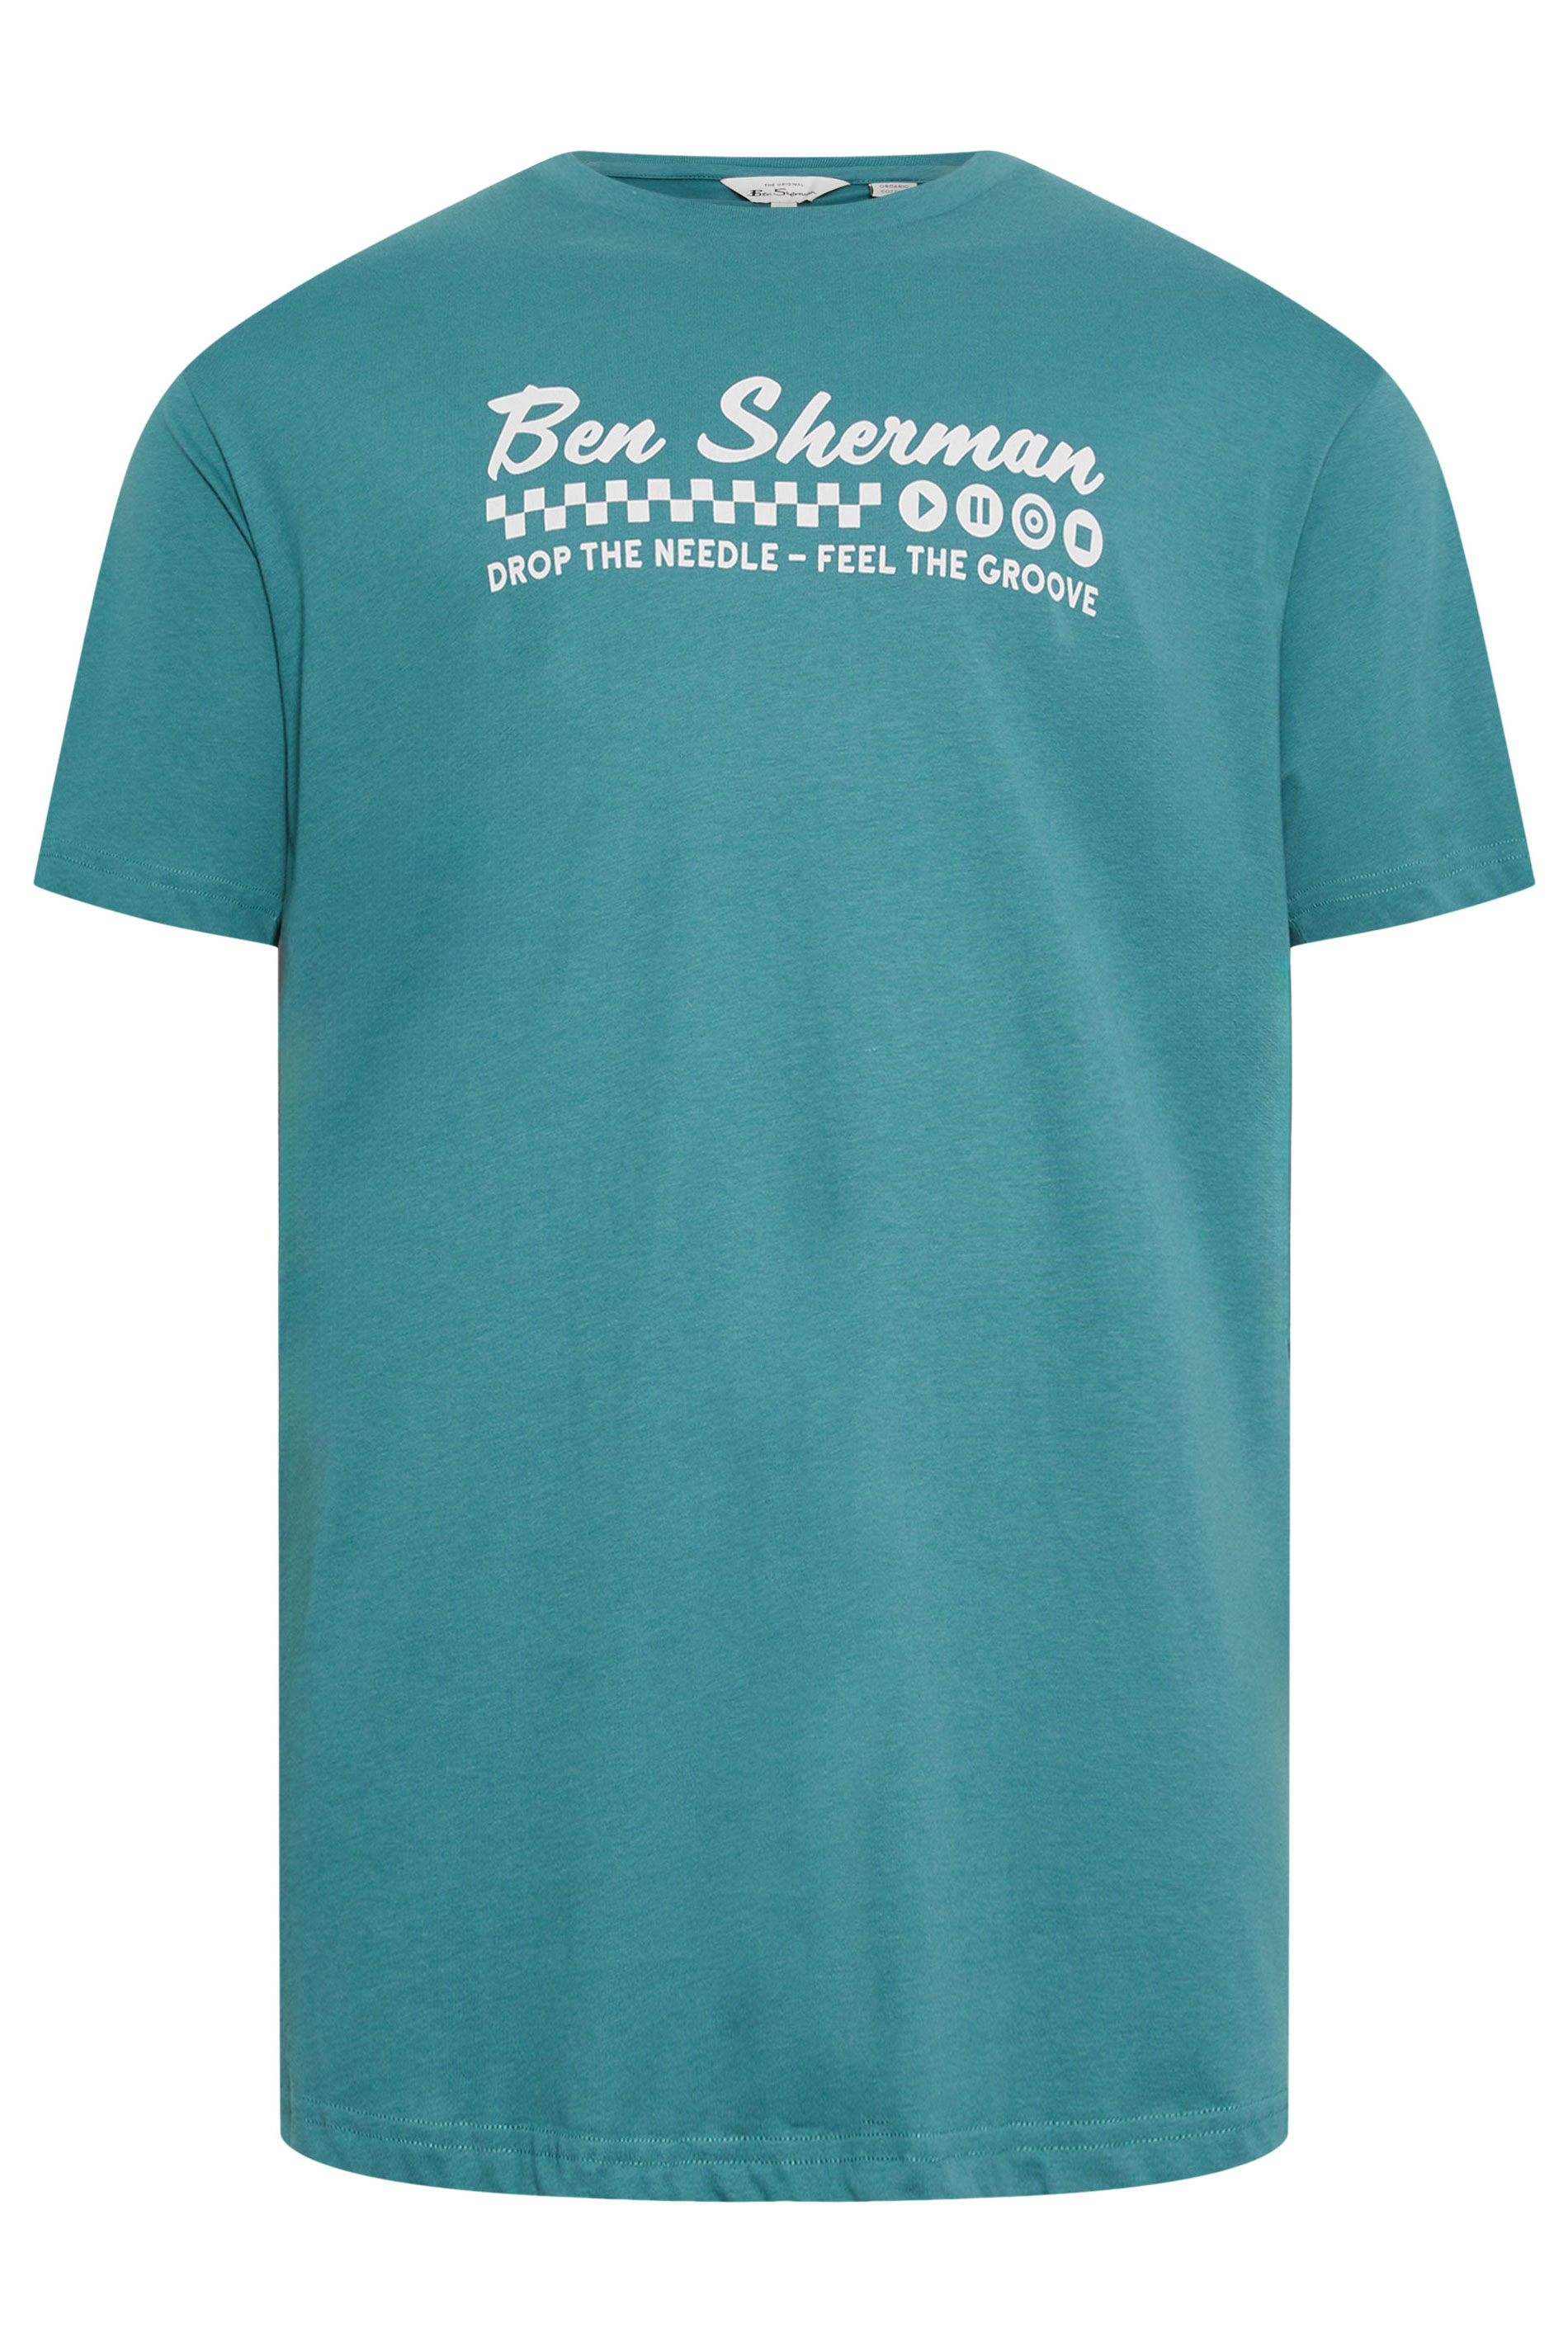 BEN SHERMAN Big & Tall Teal Blue 'Feel The Groove' T-Shirt 2